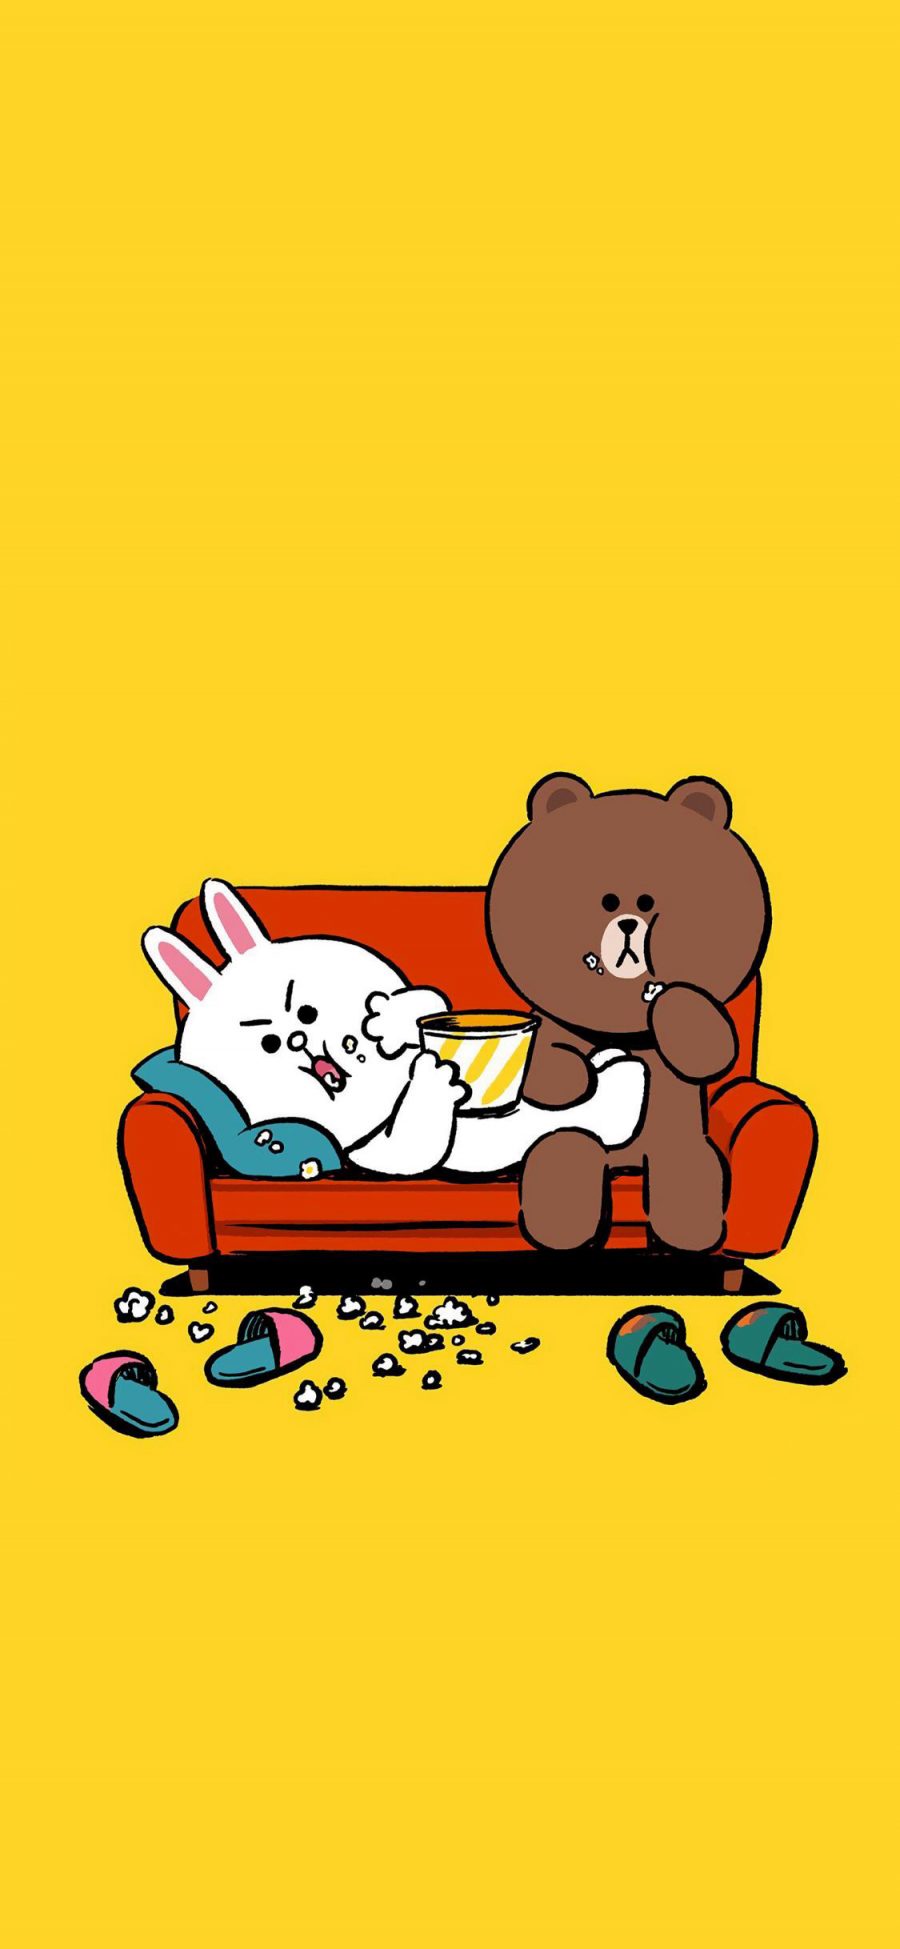 [2436×1125]linefriends 可妮兔 布朗熊 爆米花 沙发 黄色 苹果手机动漫壁纸图片